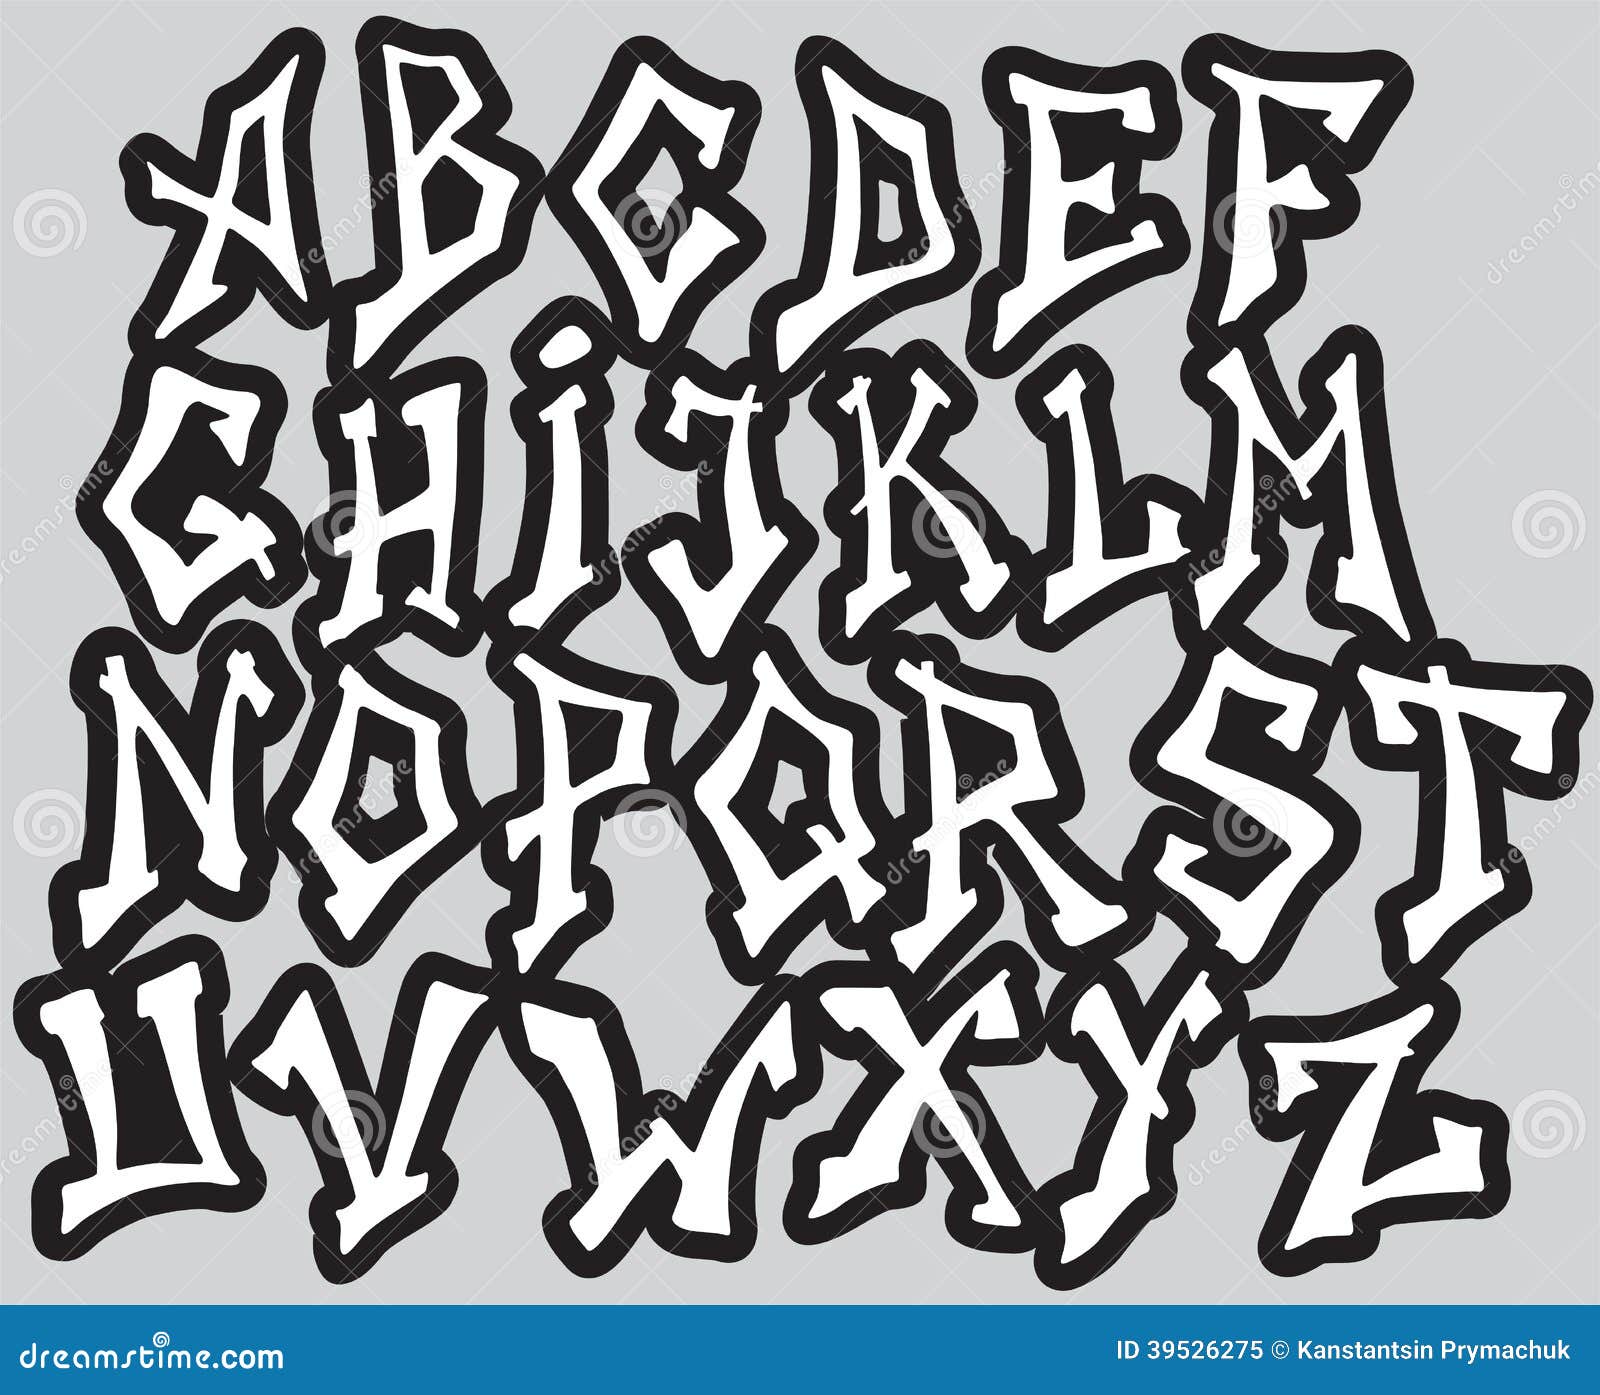 graffiti font alphabet different letters vector illustration 39526275